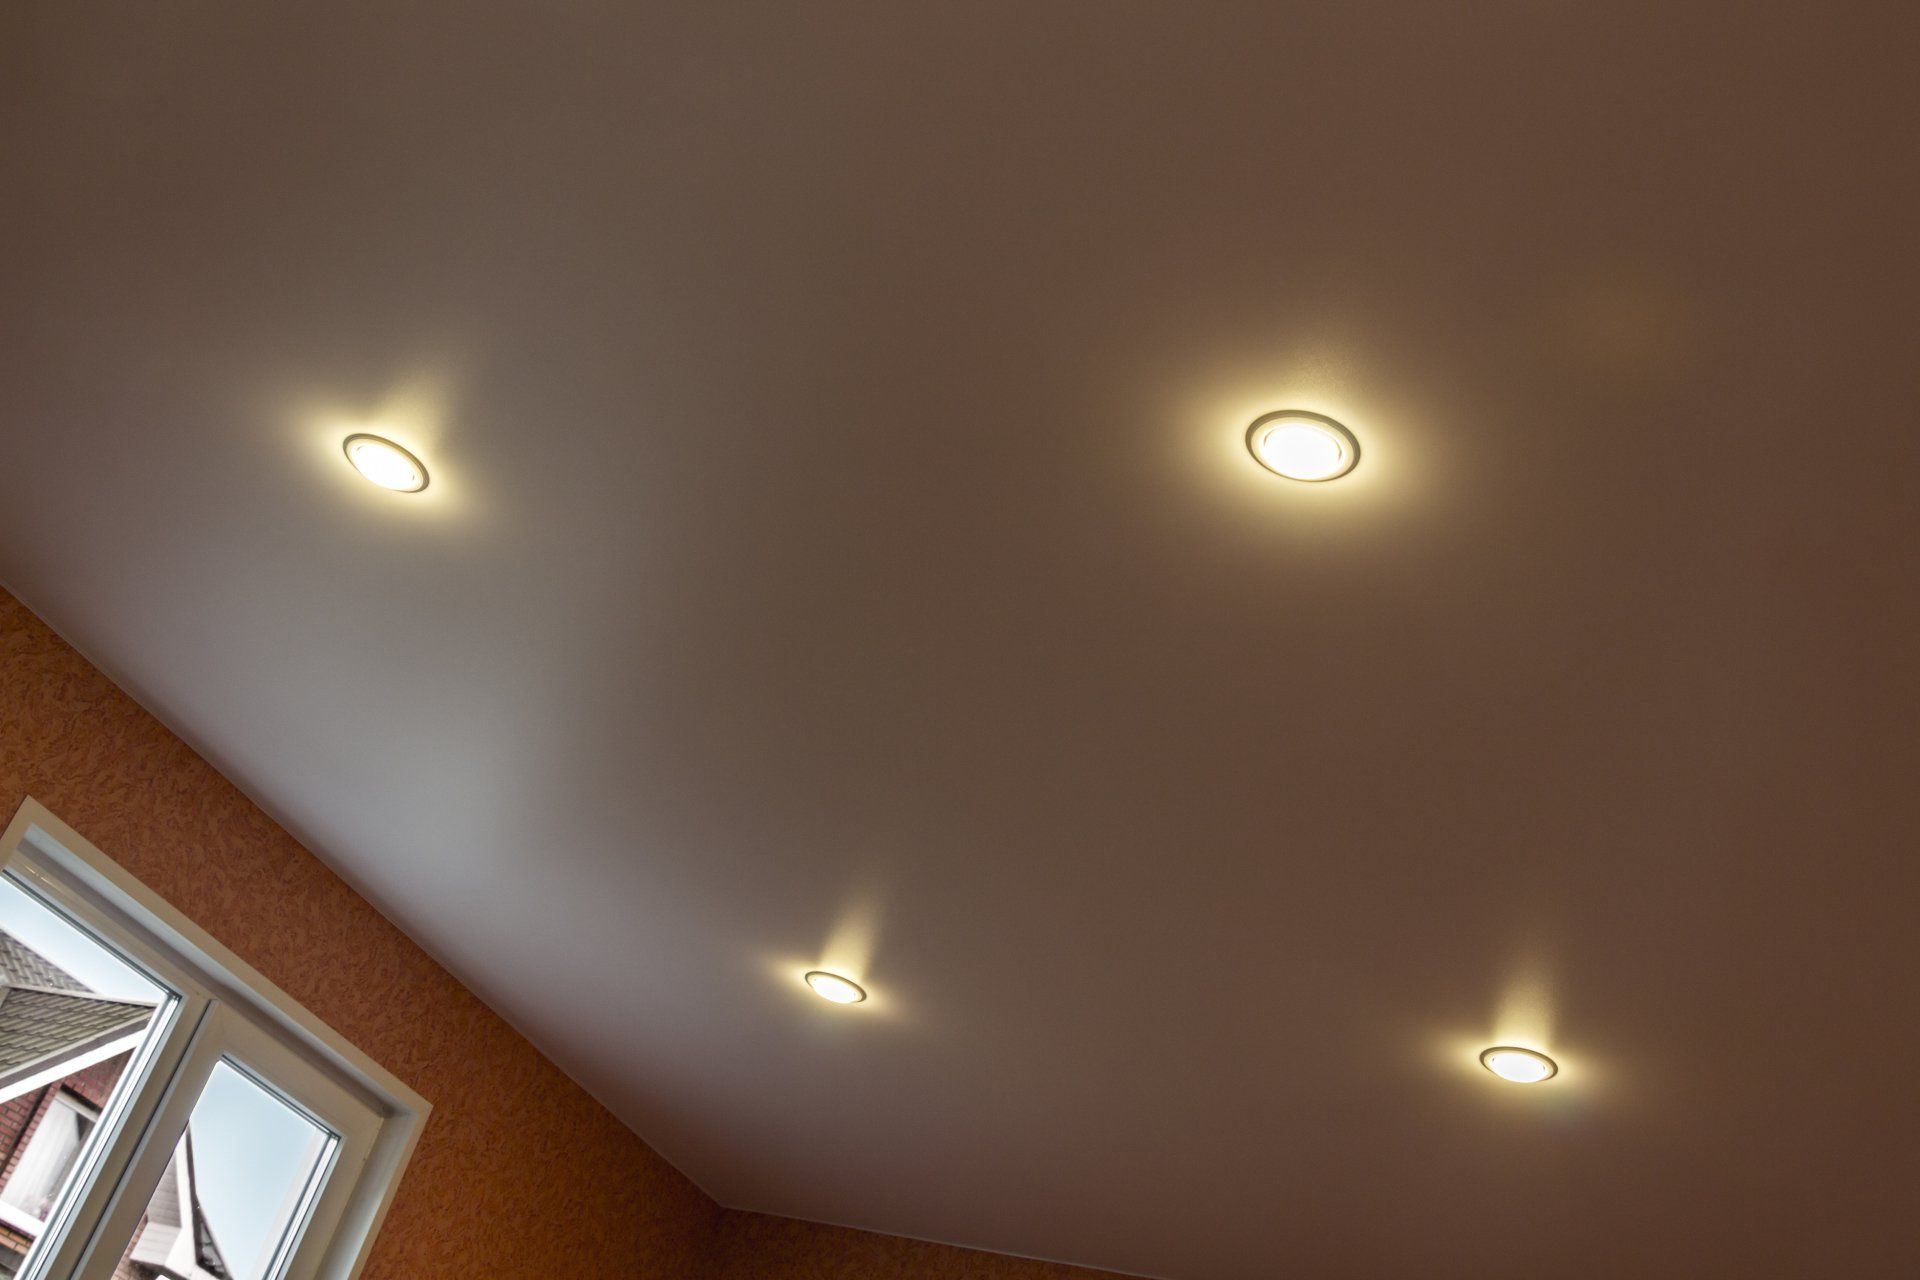 Recessed Lighting in Ceiling